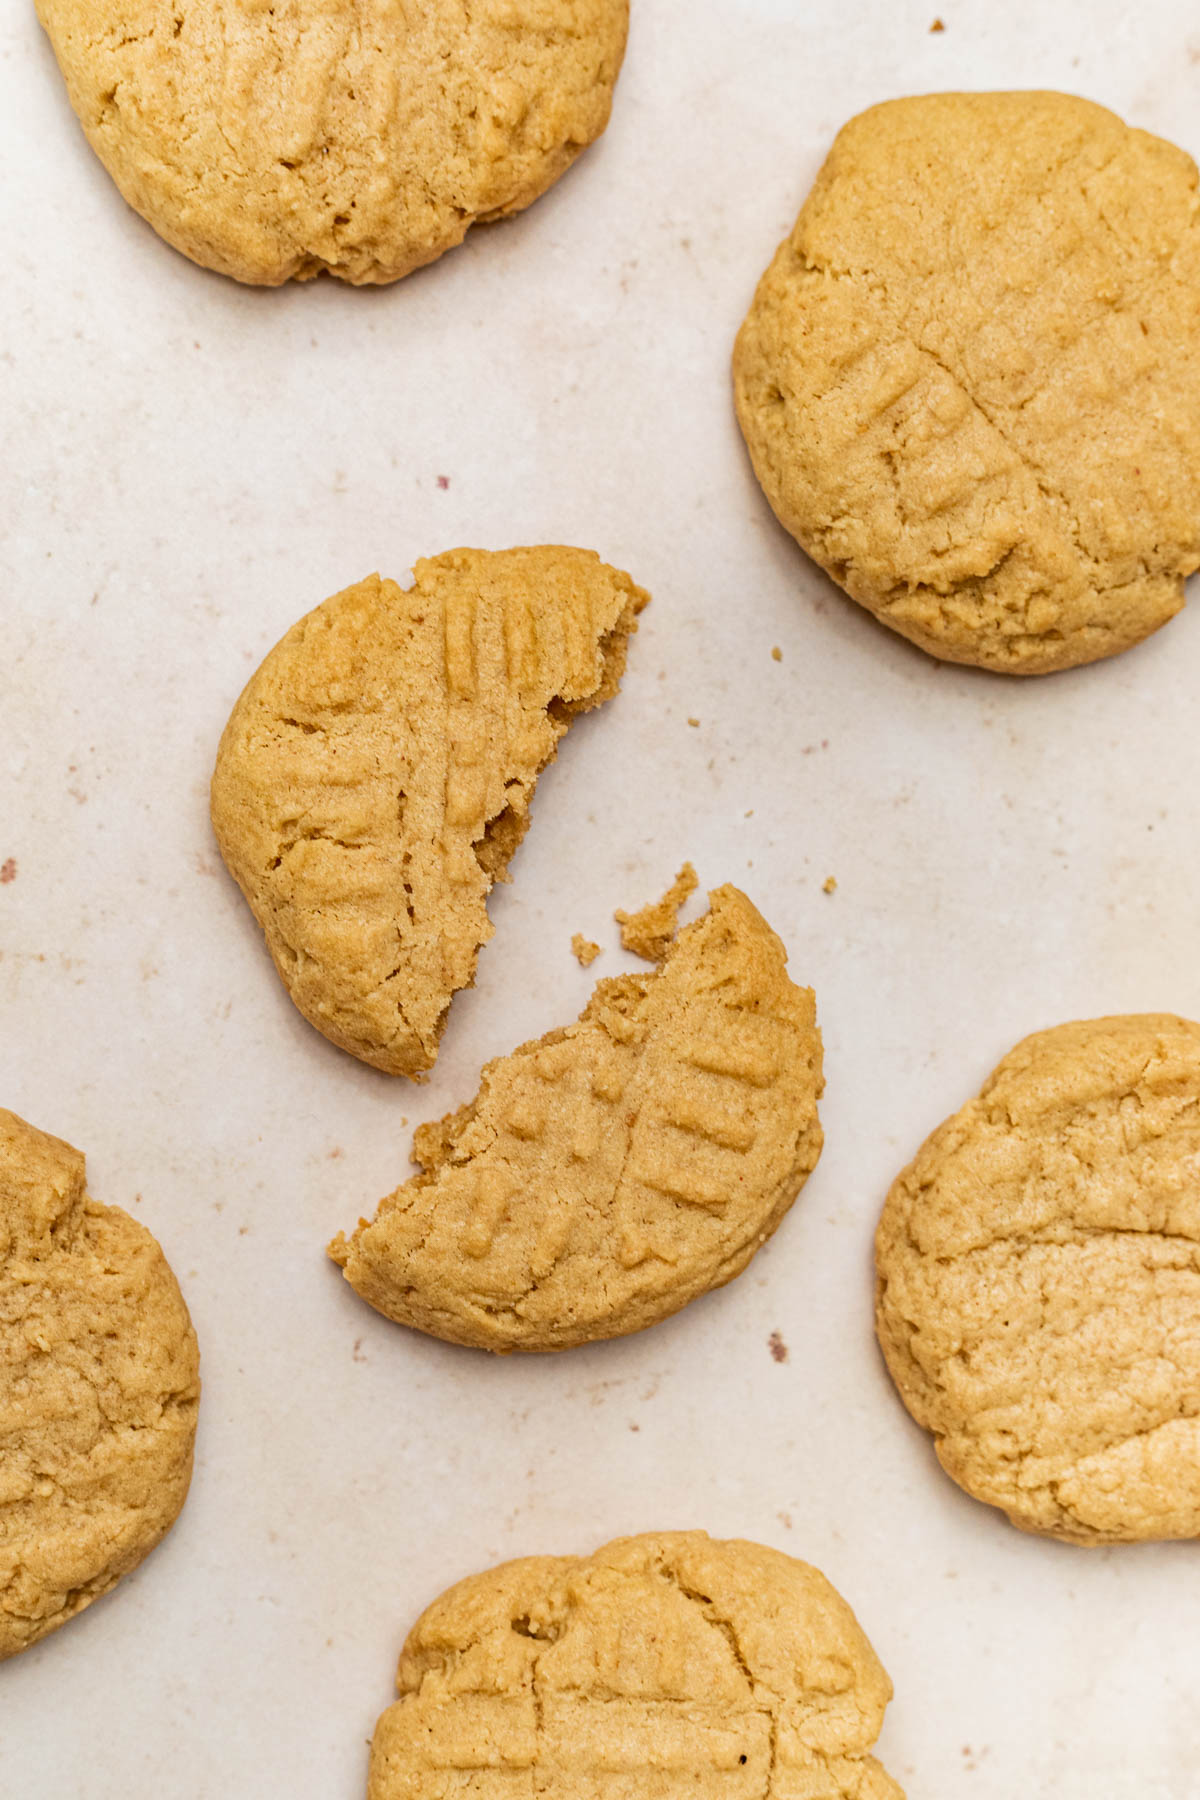 Cookies on a baking sheet, one broken in half.